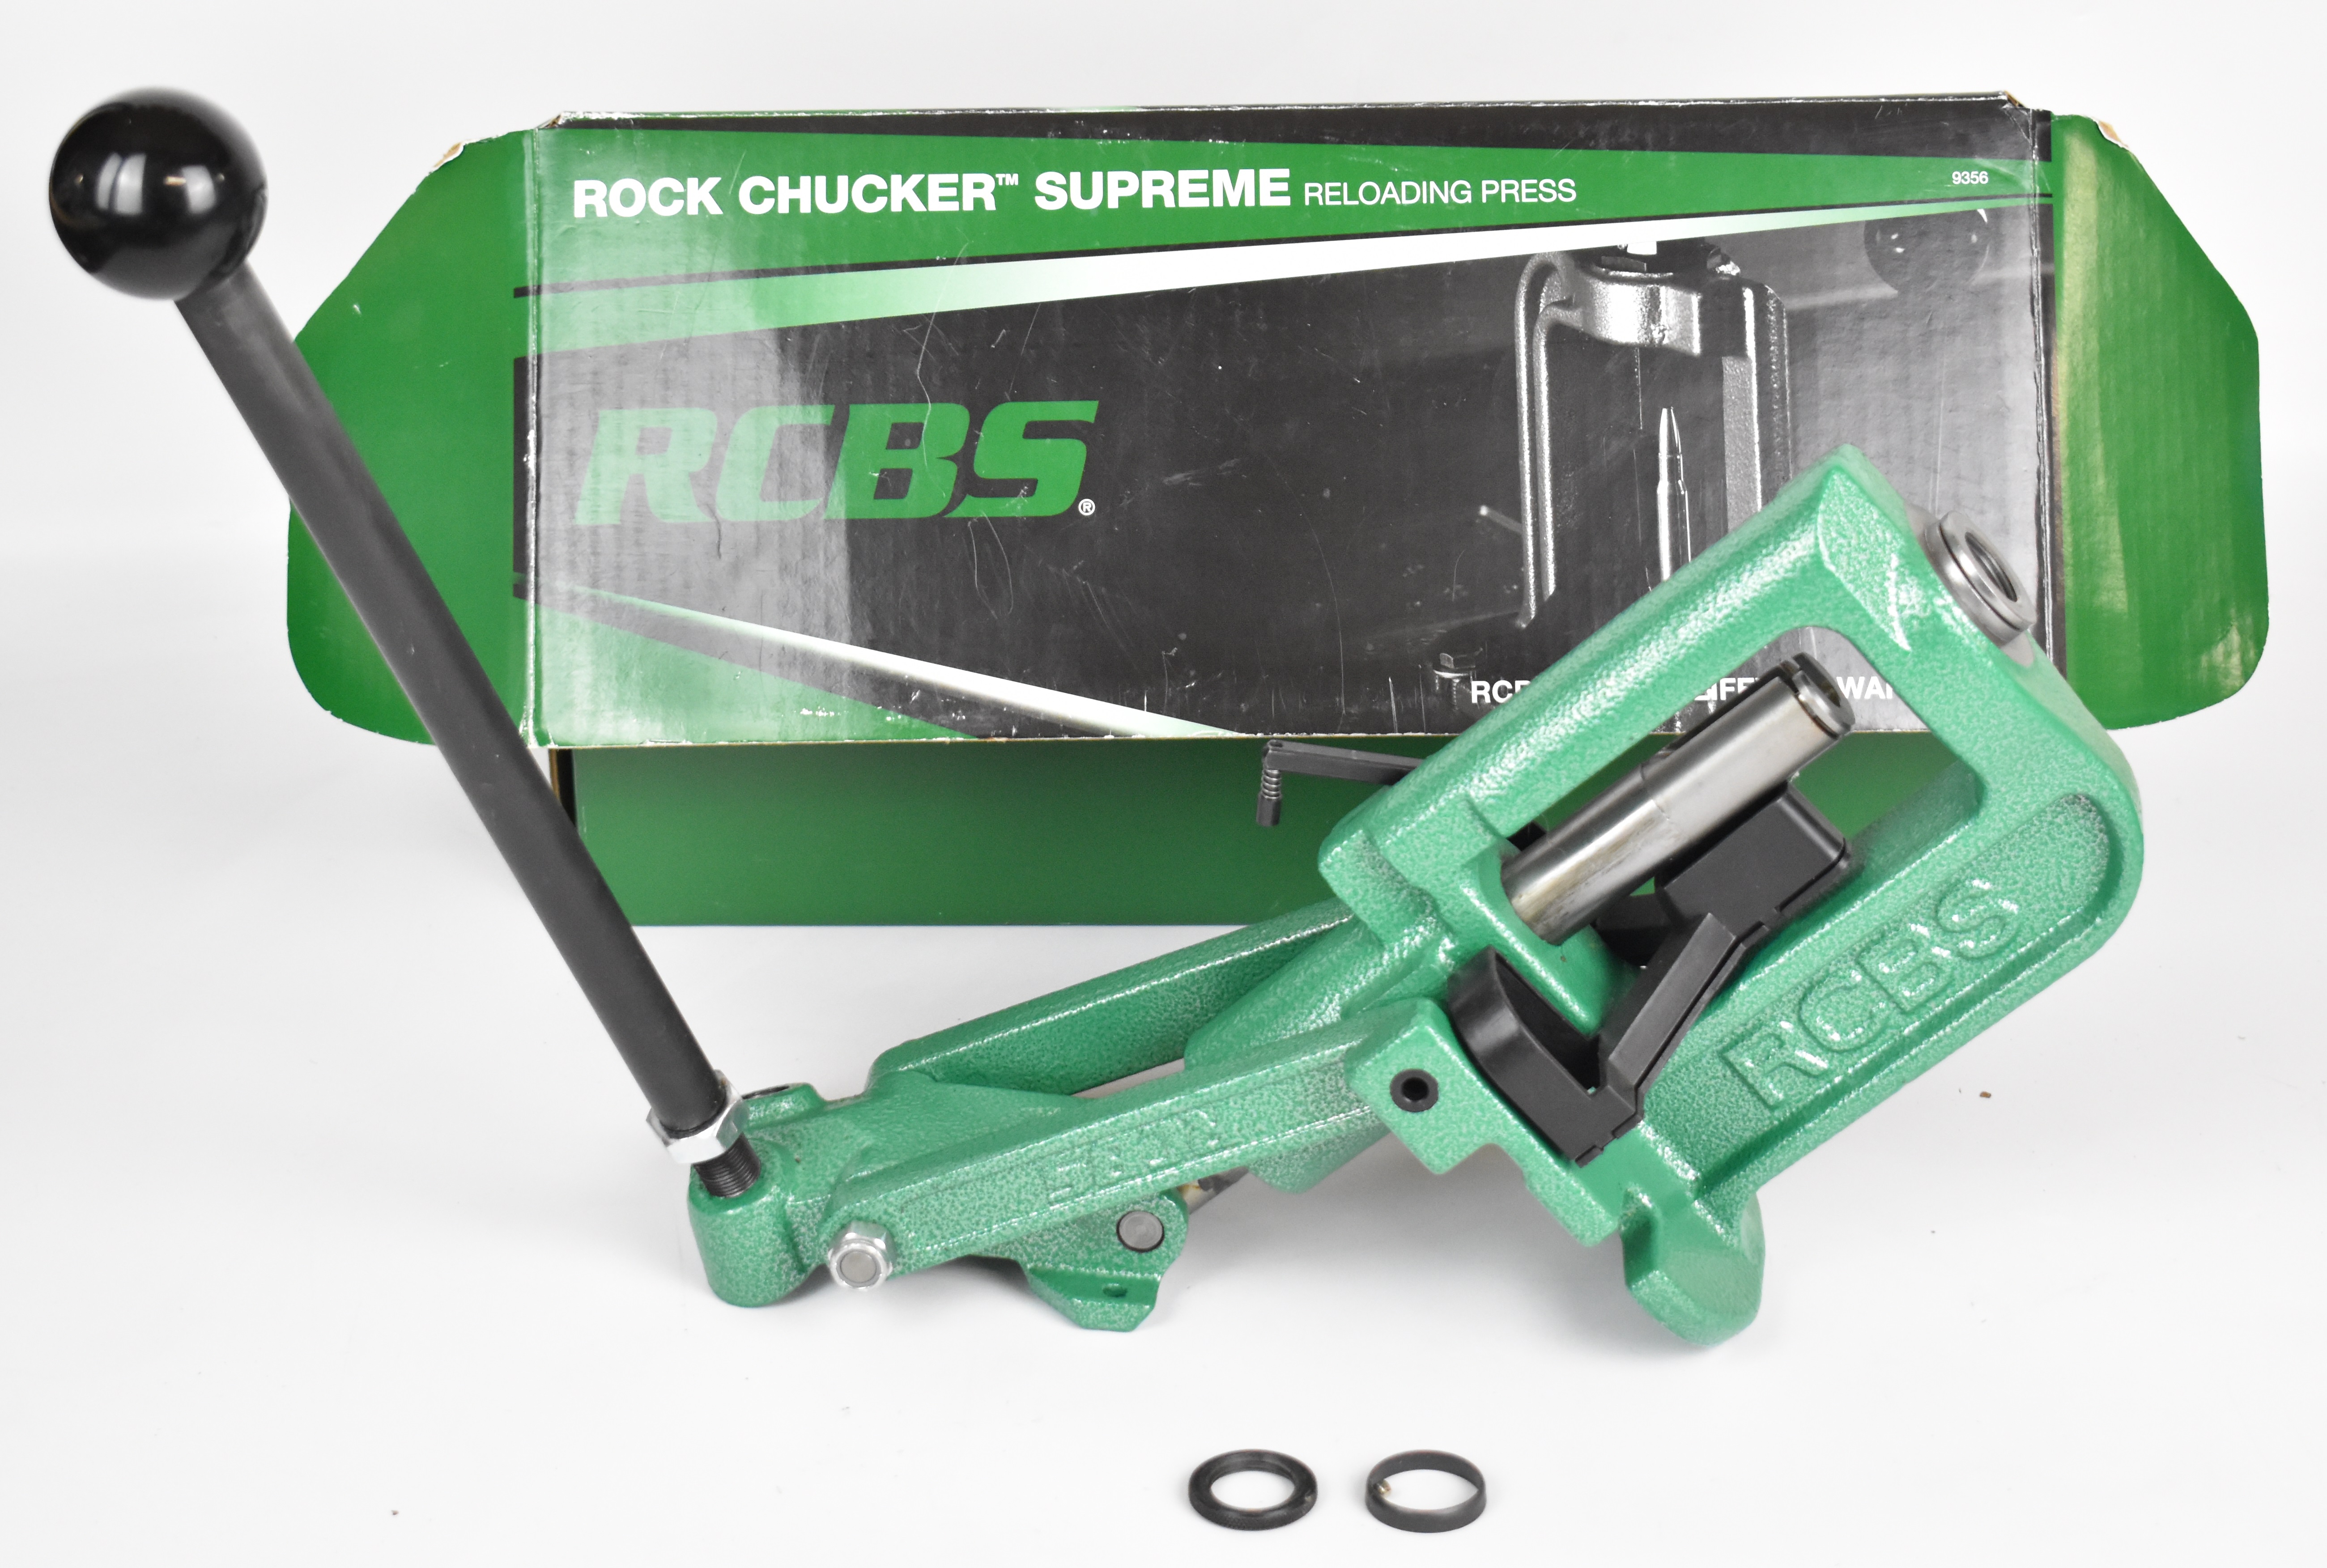 RCBS Rock Chucker Supreme shotgun or rifle cartridge re-loading press, 9356, in original box. - Image 2 of 2